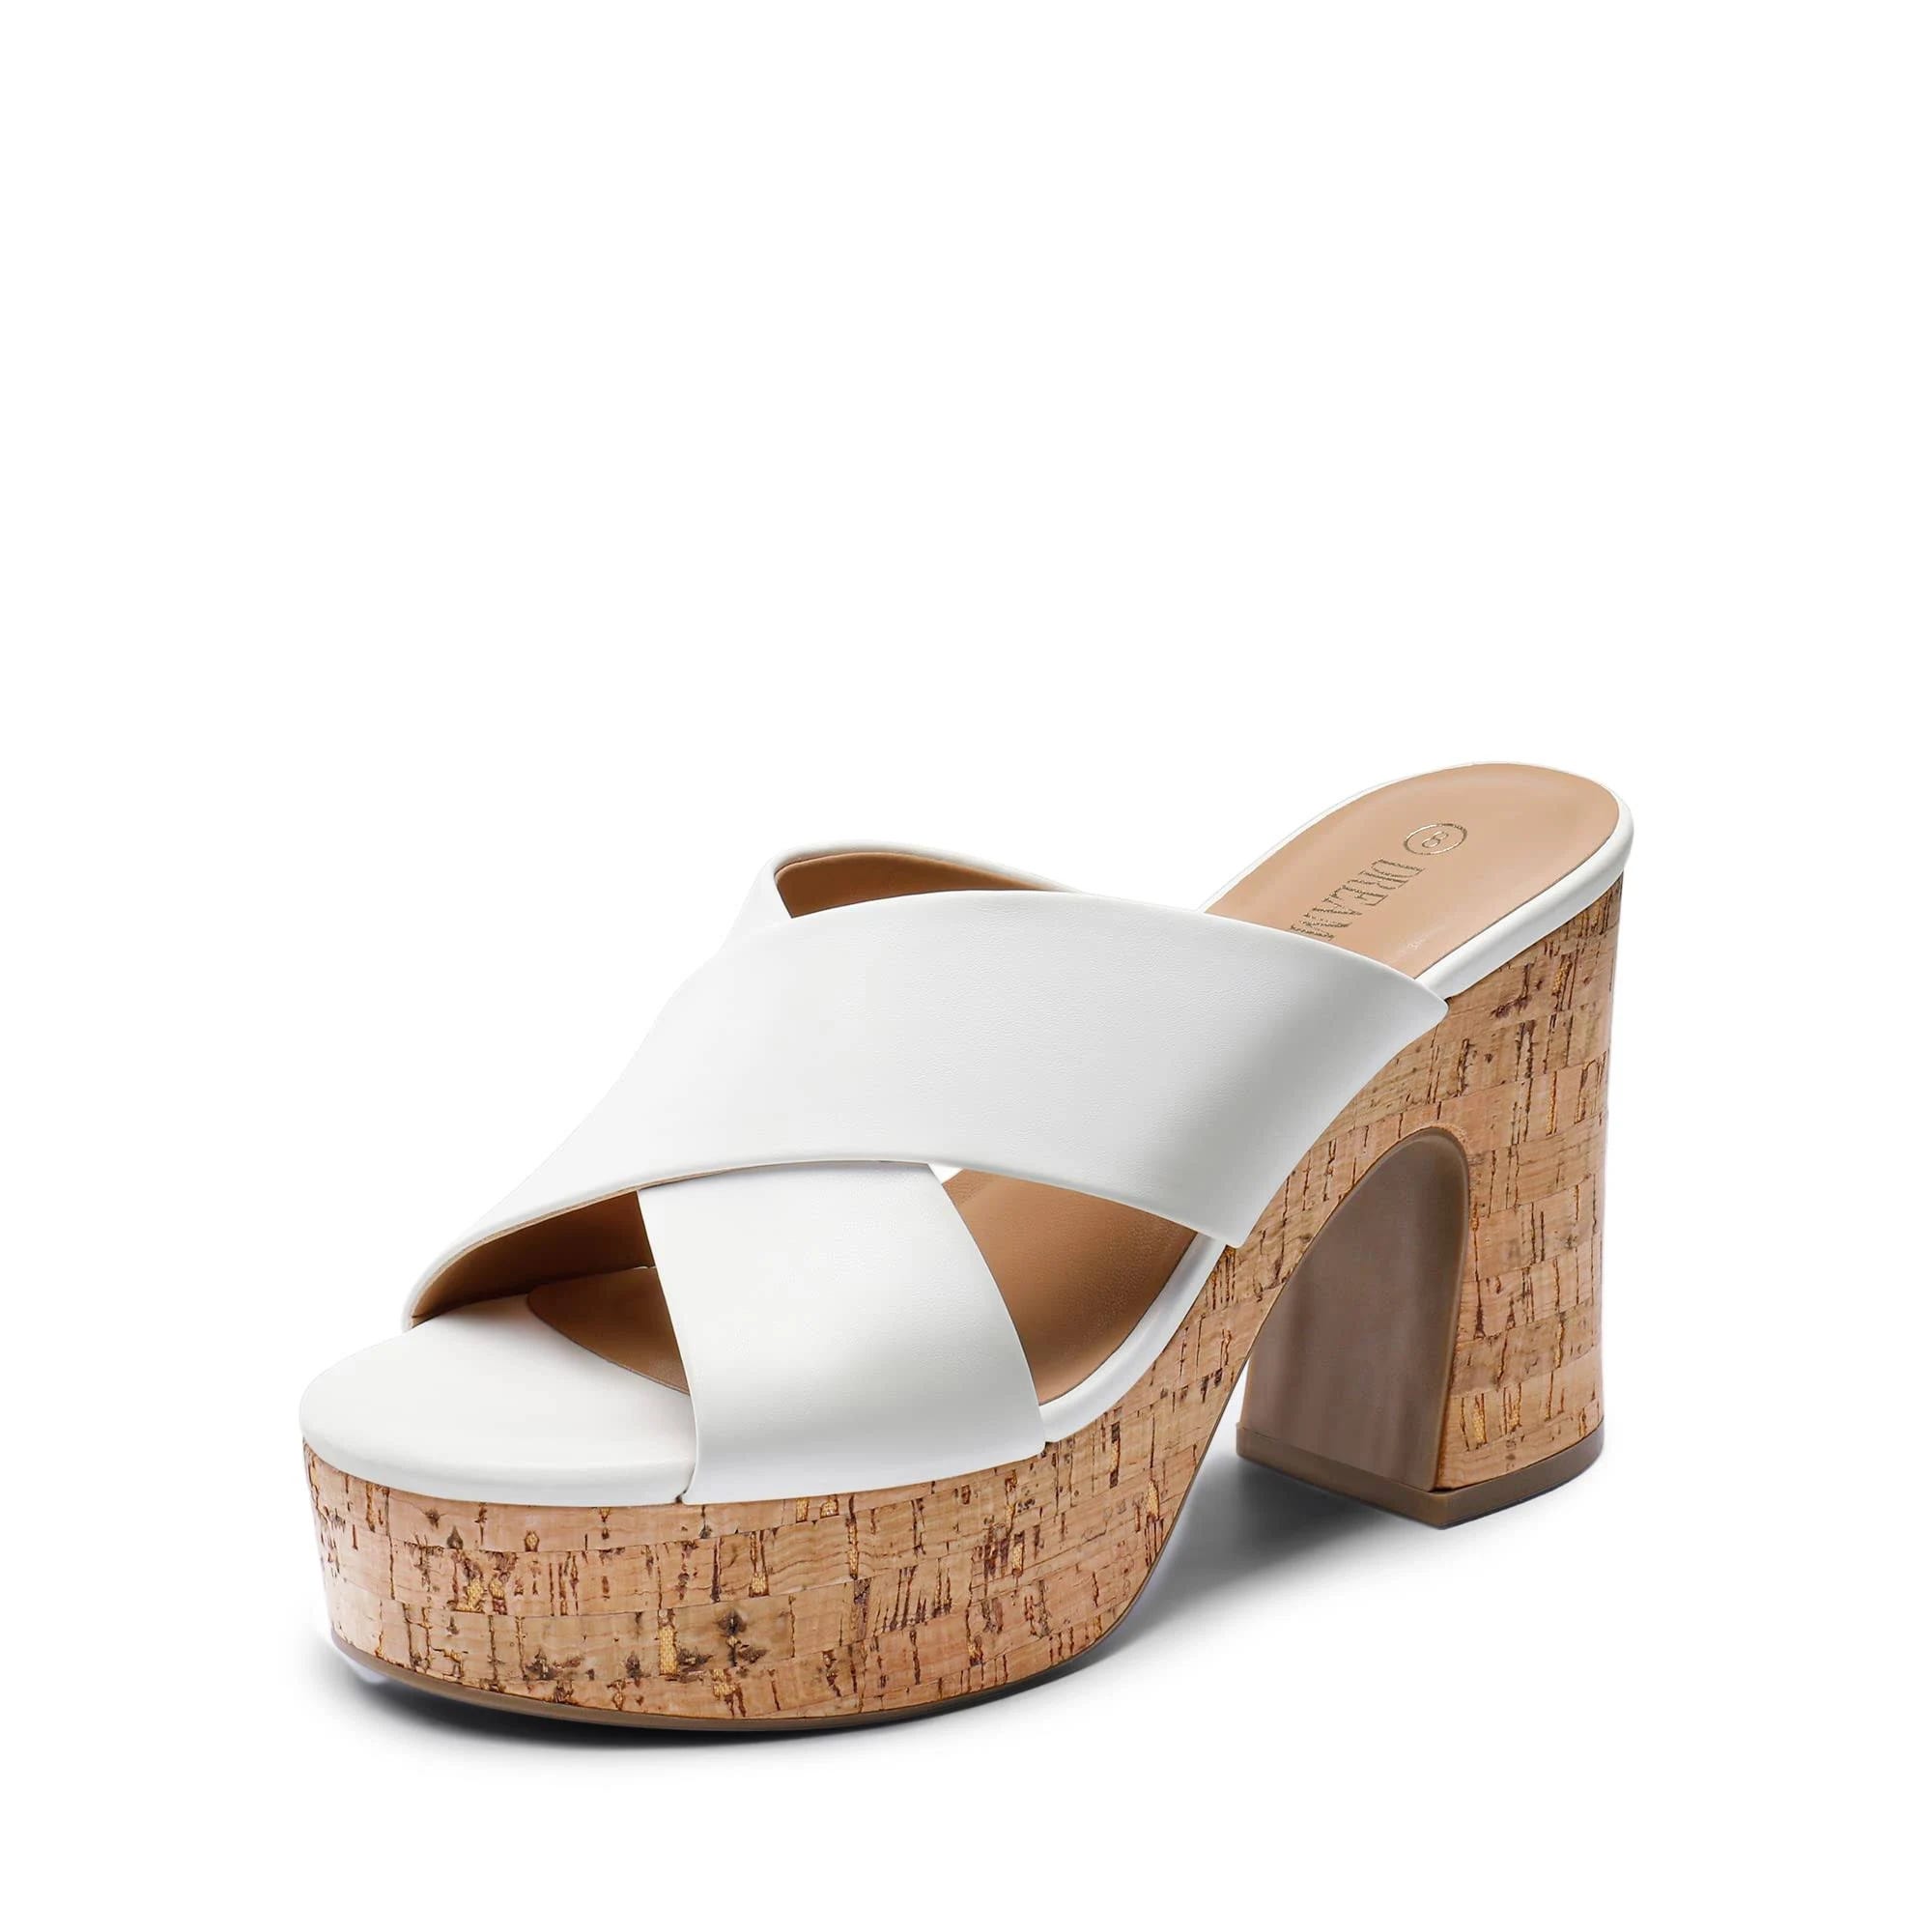 Fashionable Denim Slip-On Sandals with Comfortable High Heel | Image